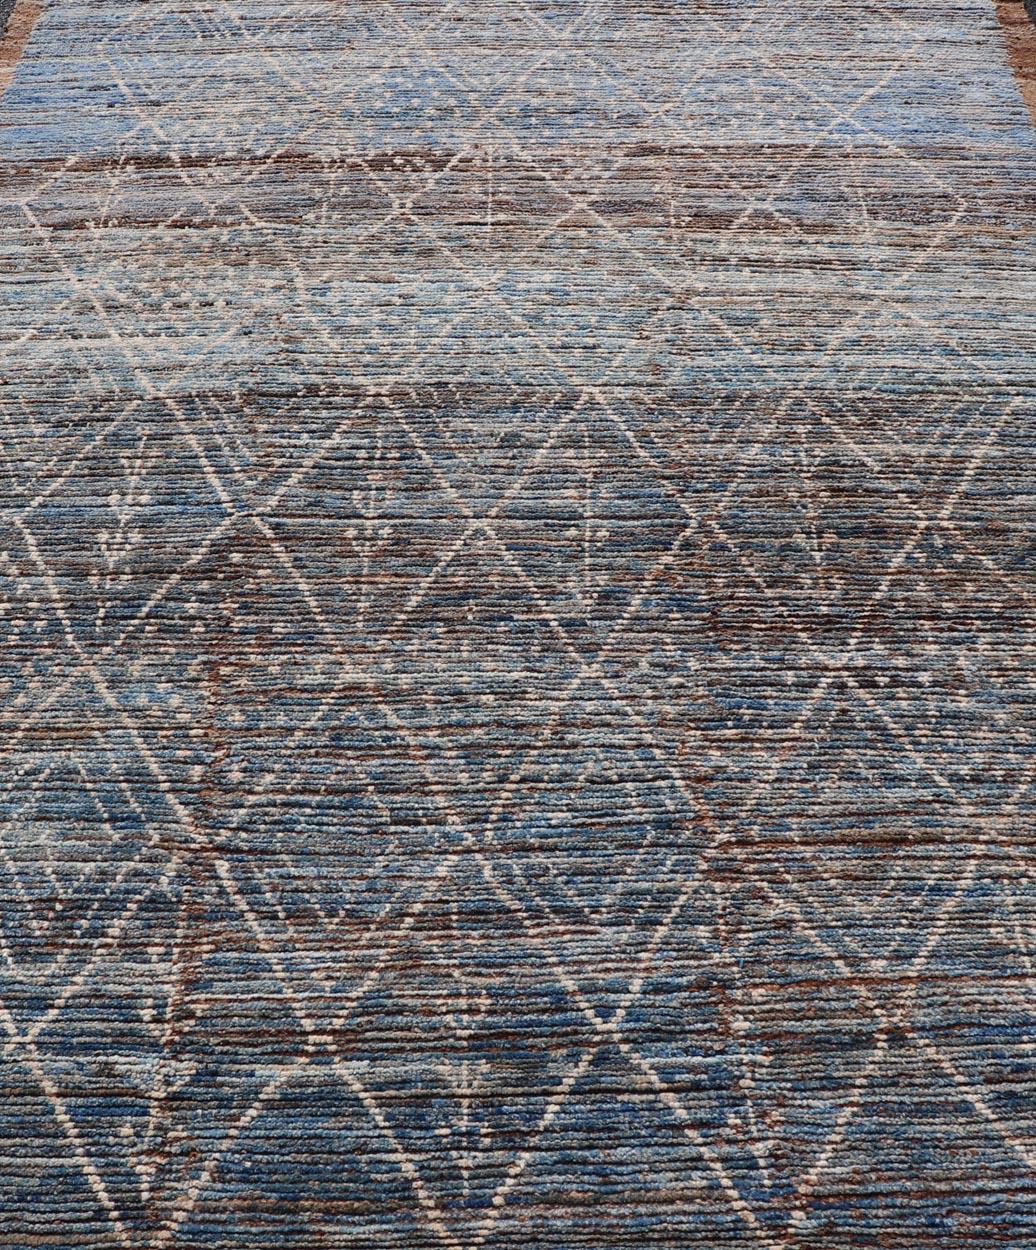 Modern Tribal Rug in Wool with Sub-Geometric Design in Dark Blue, Tan, & Ivory For Sale 5